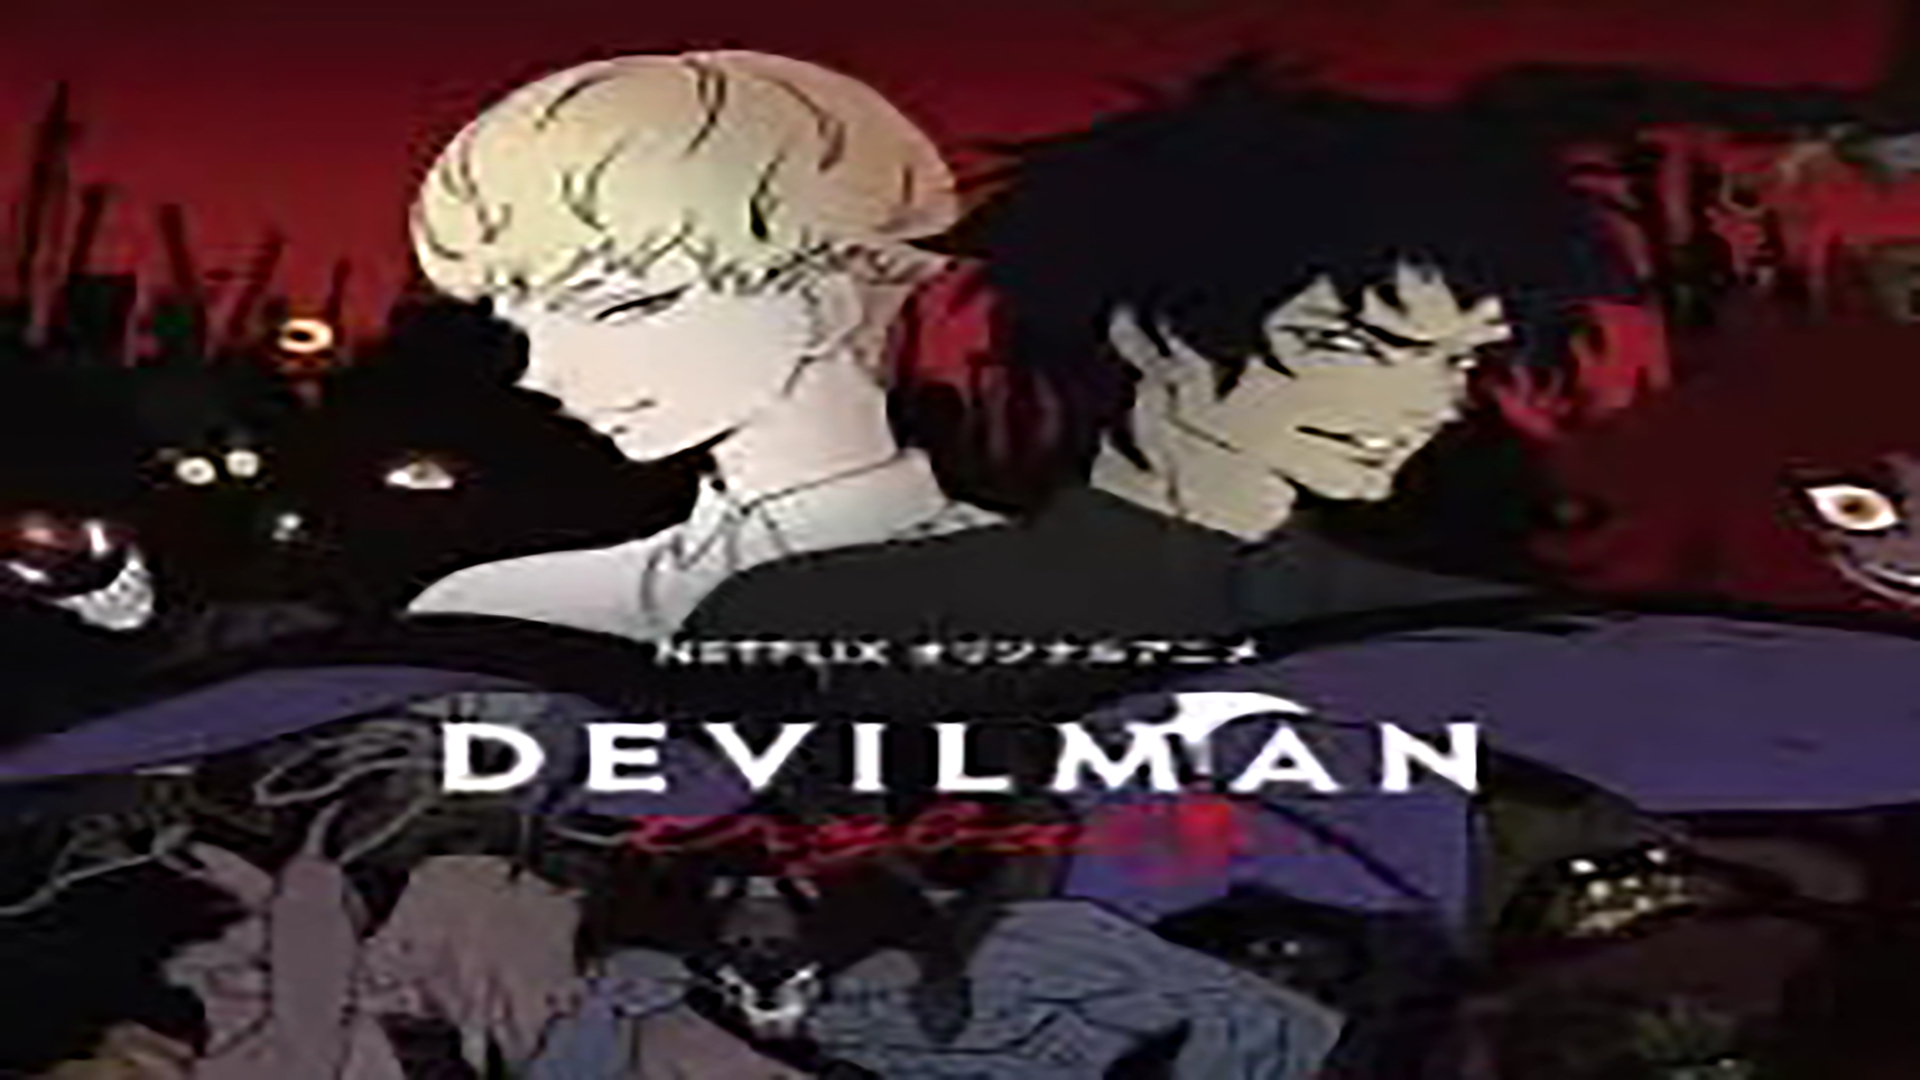 Devilman Crybaby Season 1 Episode 9 Go To Hell You Mortals  Recap  Review with Spoilers